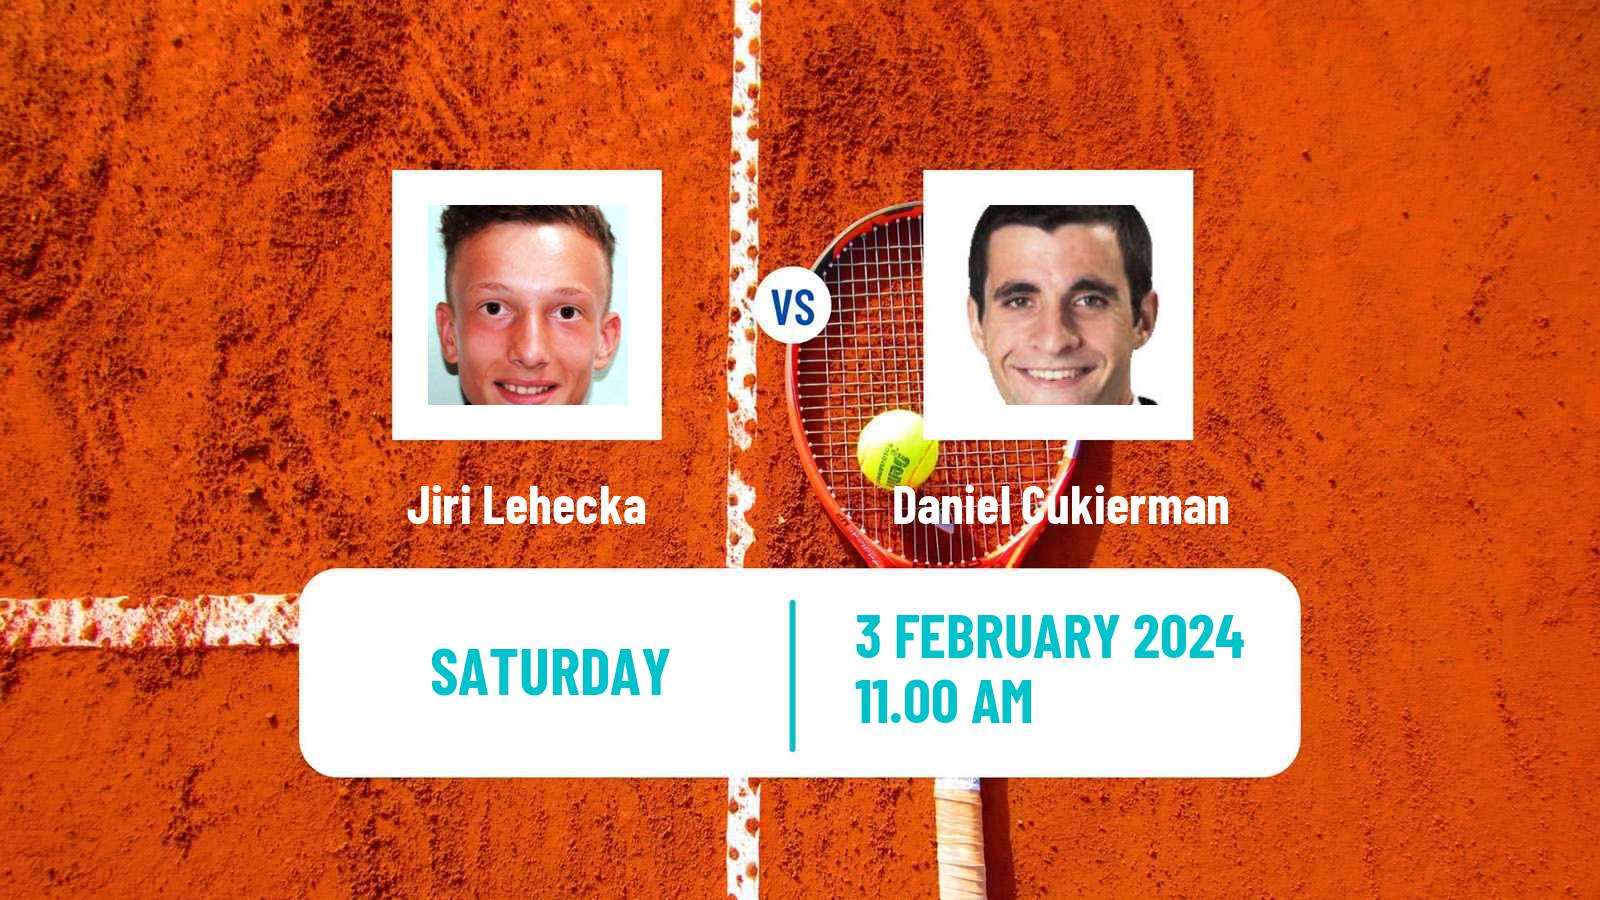 Tennis Davis Cup World Group Jiri Lehecka - Daniel Cukierman